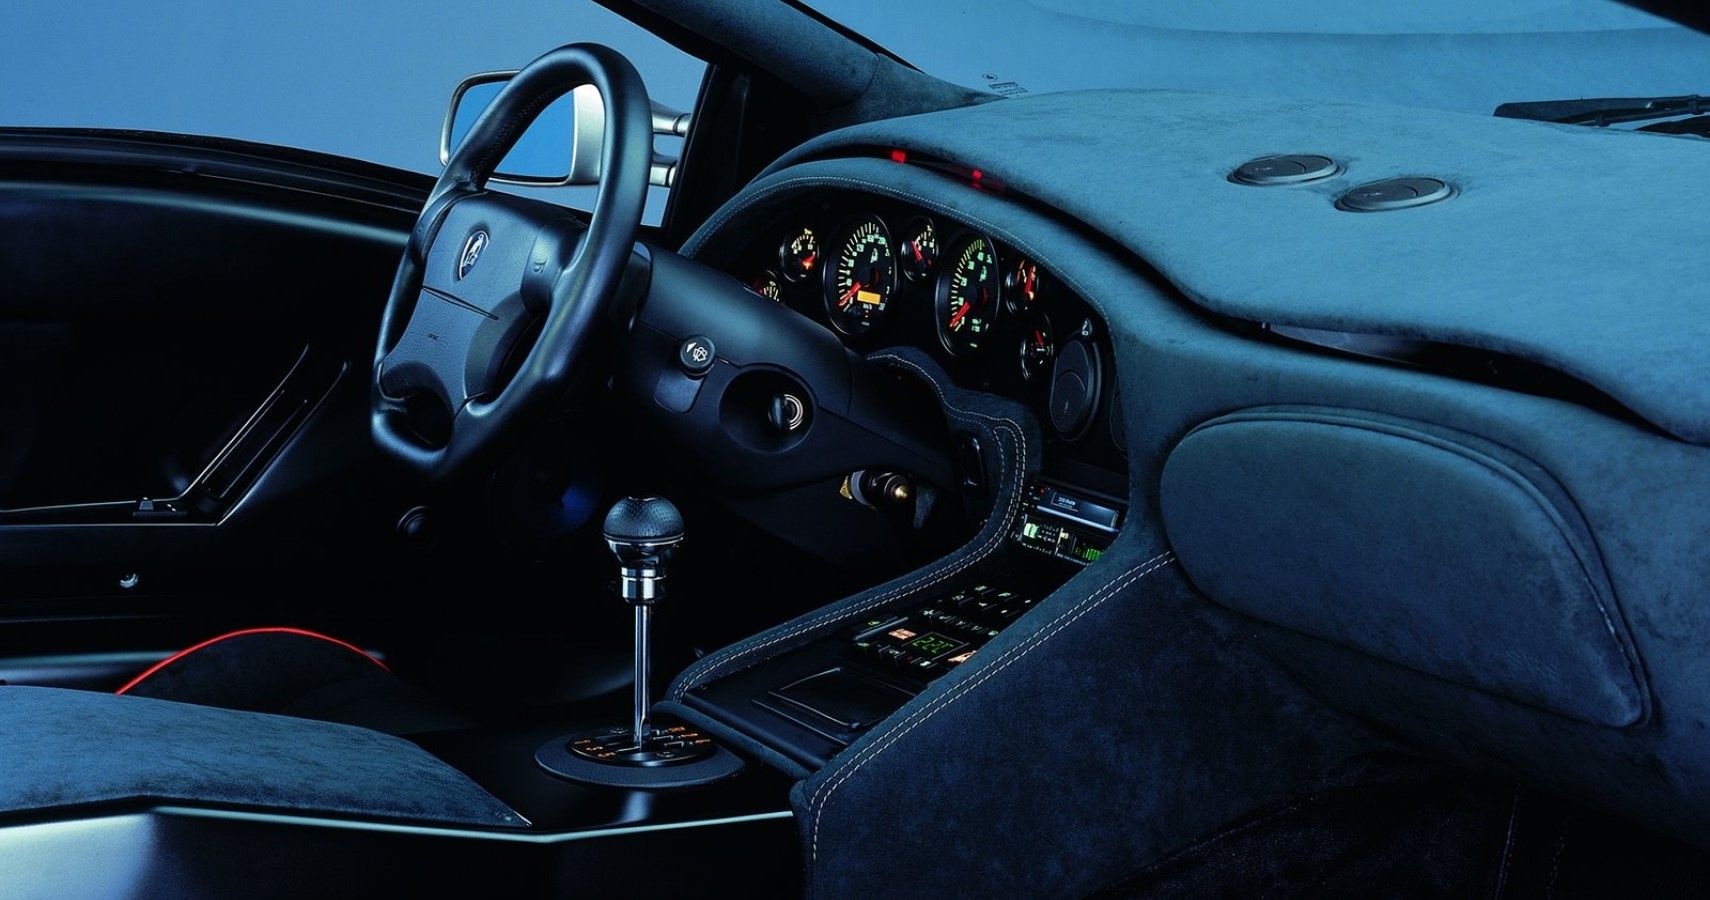 Lamborghini Diablo SV interior view